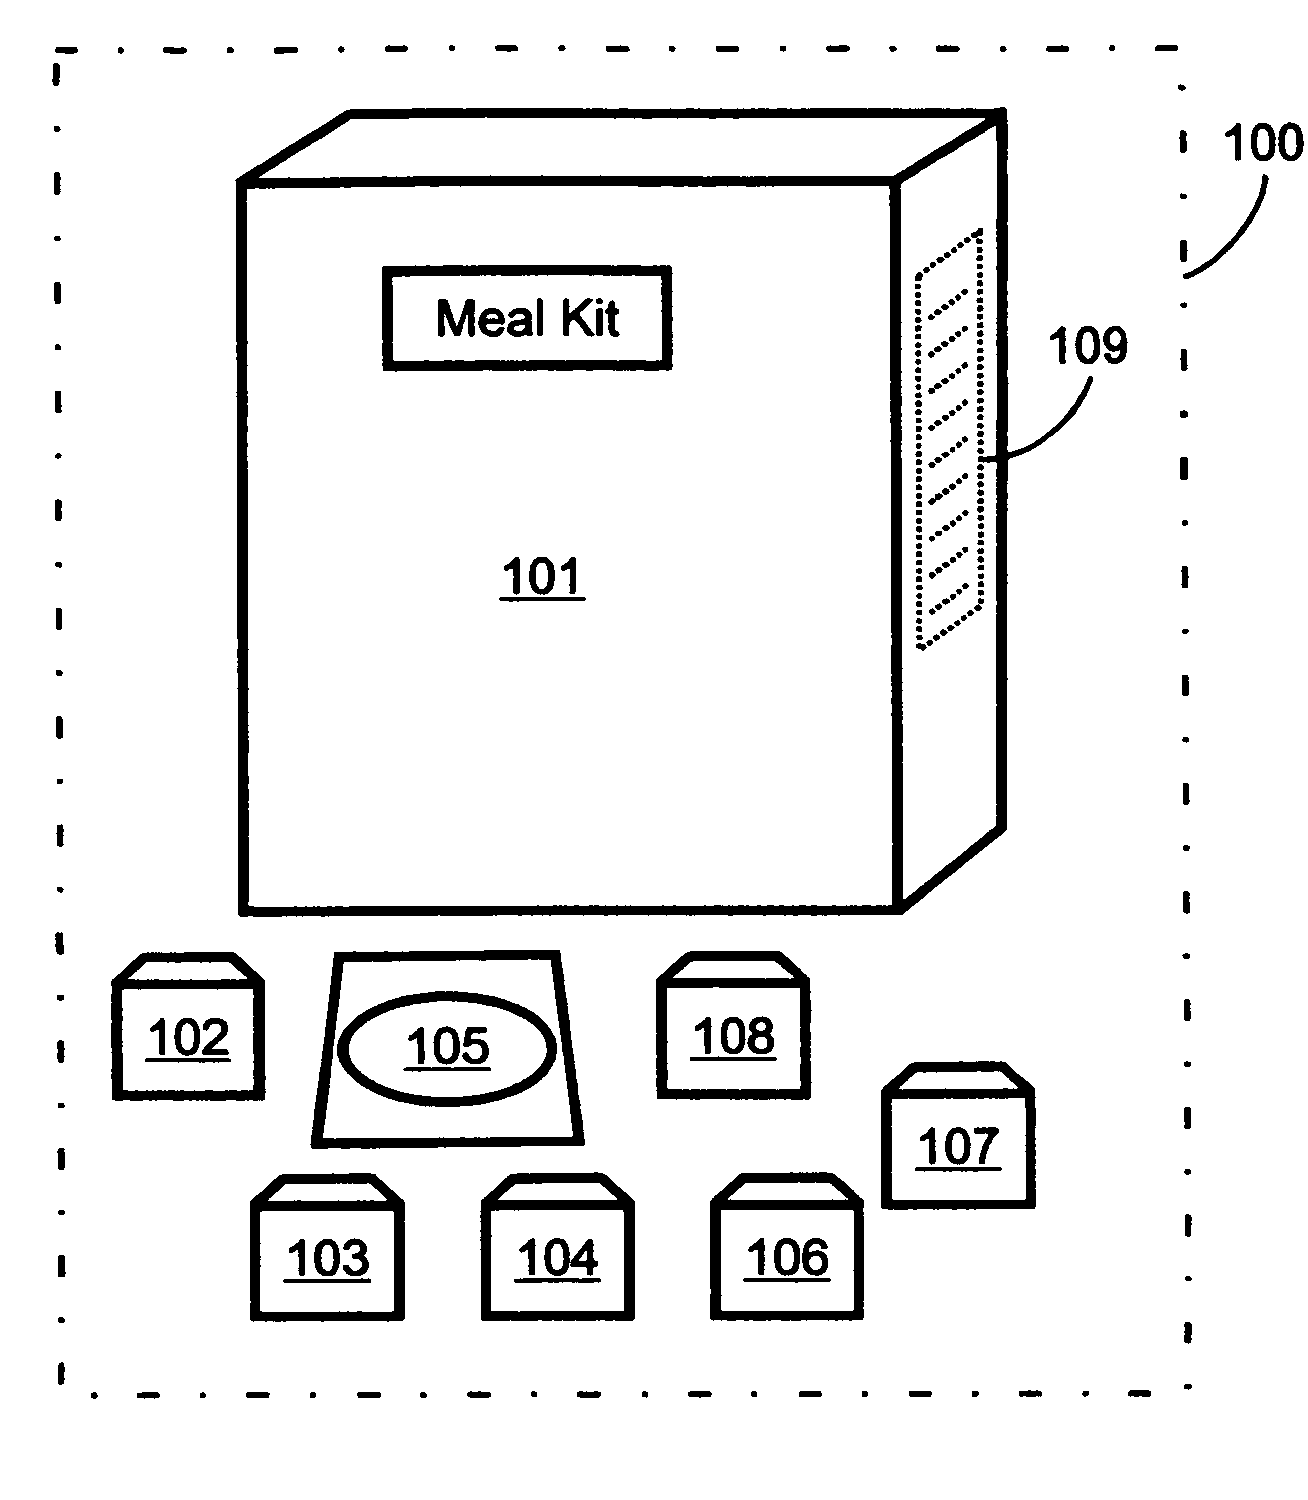 Multiple-option meal kit